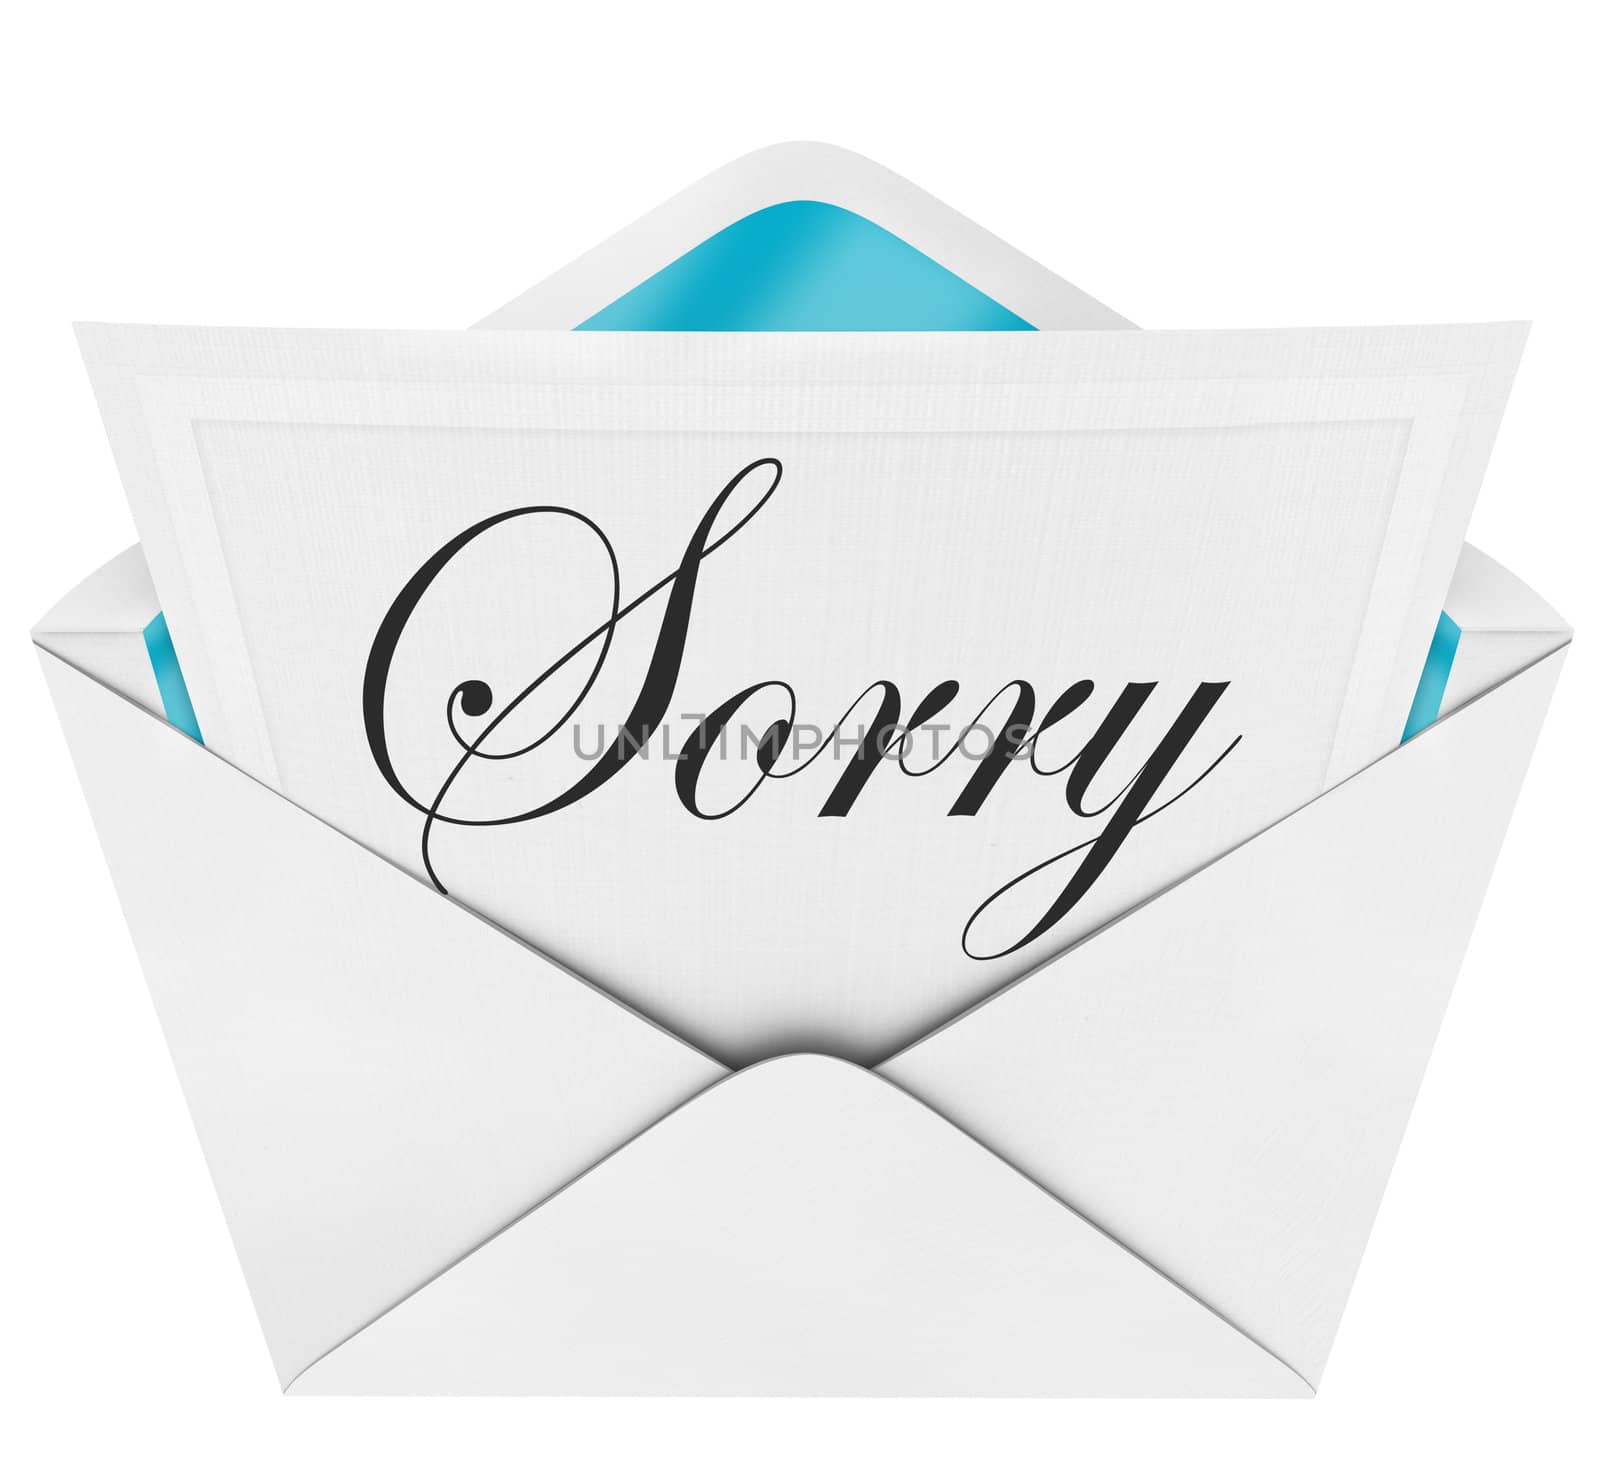 Sorry Handwritten Cursive Word Open Envelope Letter by iQoncept